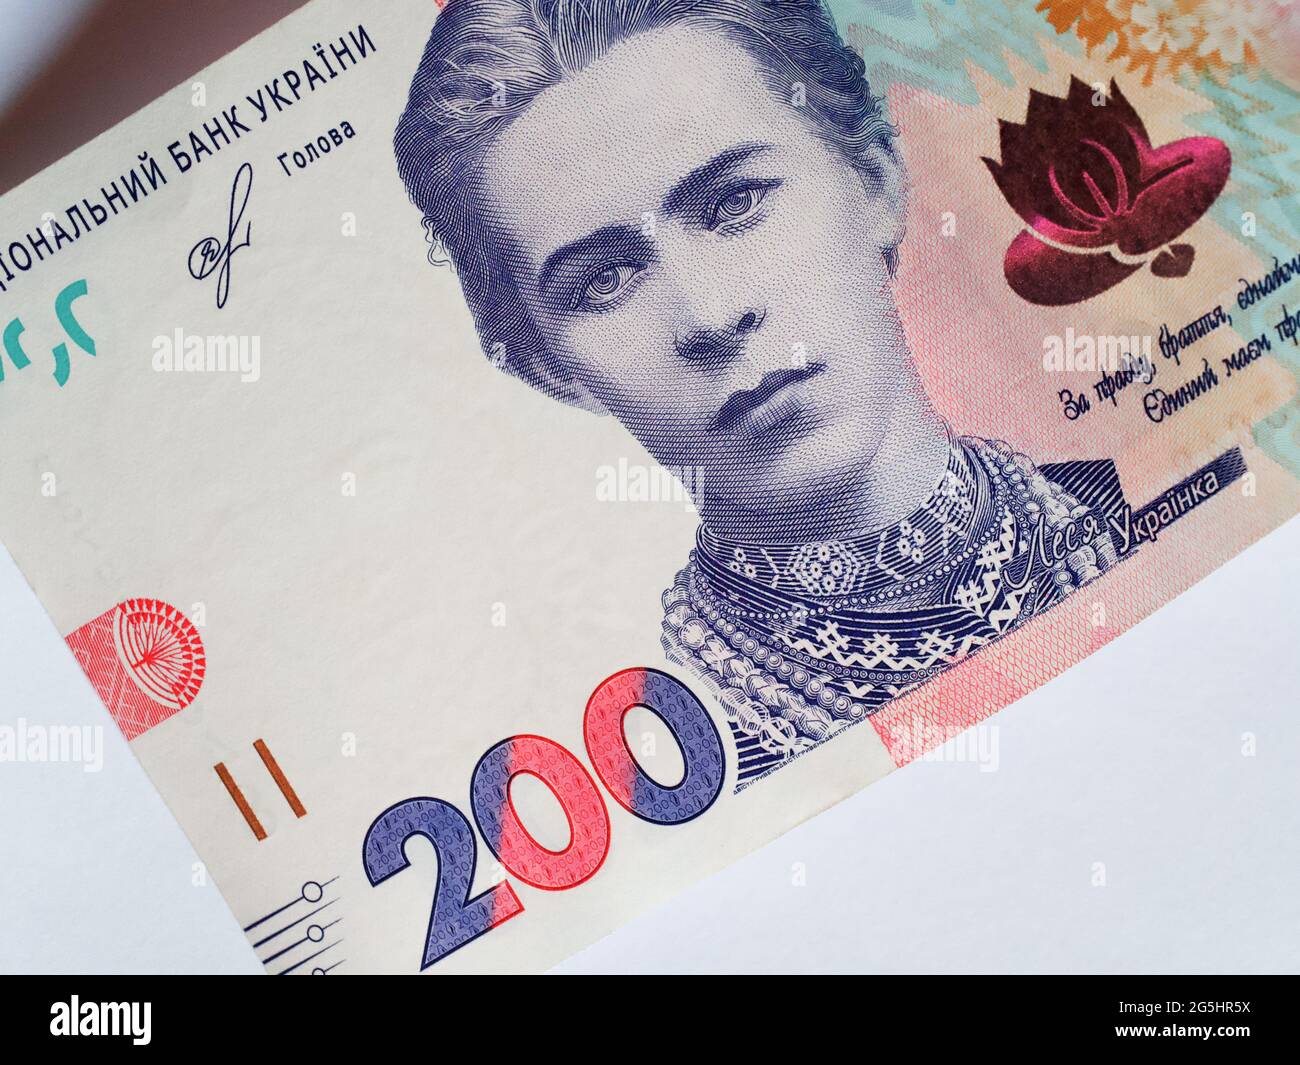 Banknote of 200 hryvnia, close-up. Portrait of poetess Lesya Ukrainka. Stock Photo